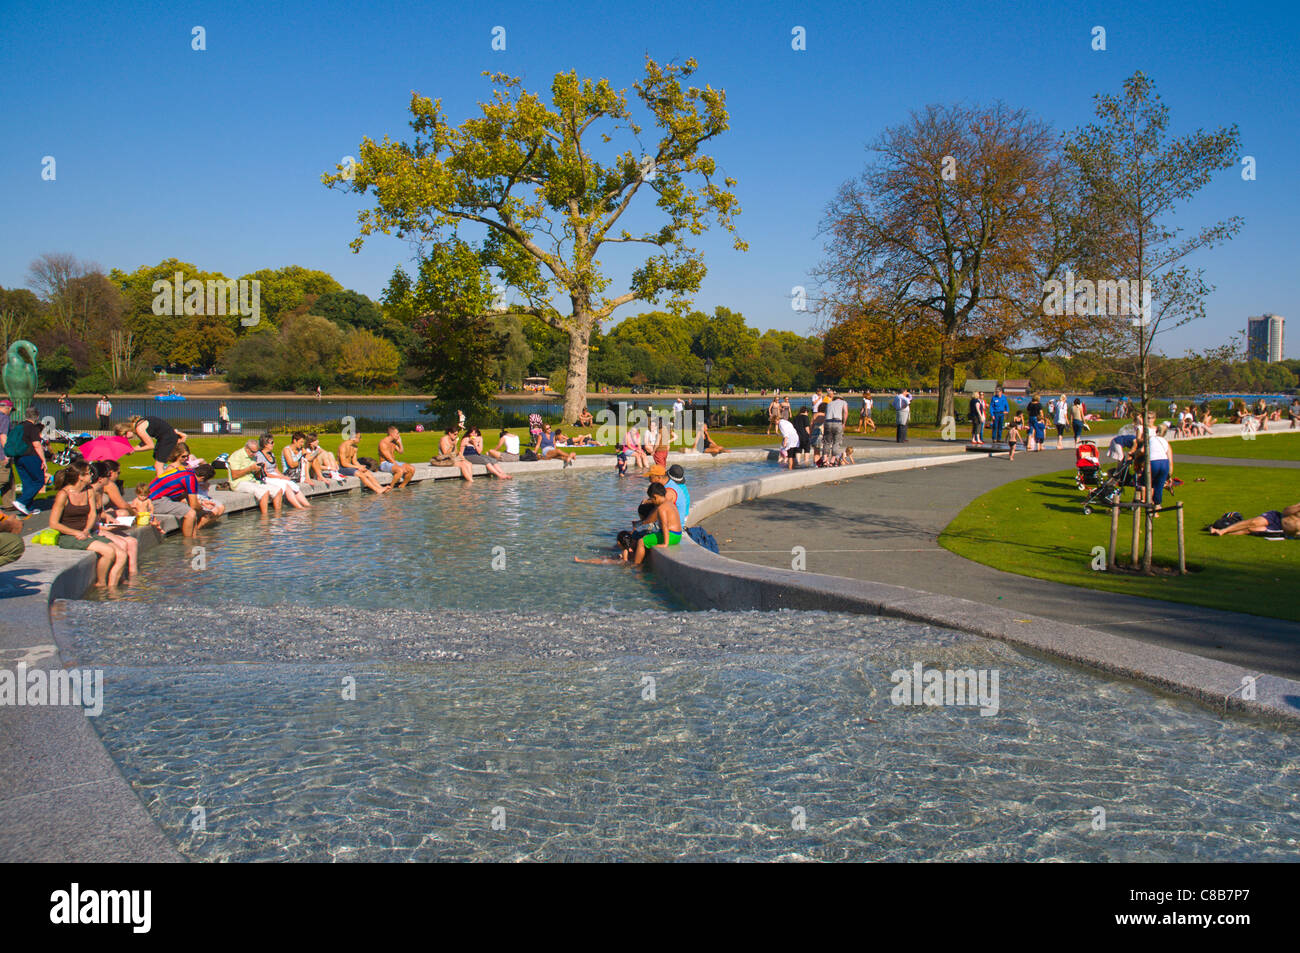 Prinzessin Diana Memorial Fountain in Hyde Park London England UK Mitteleuropa Stockfoto